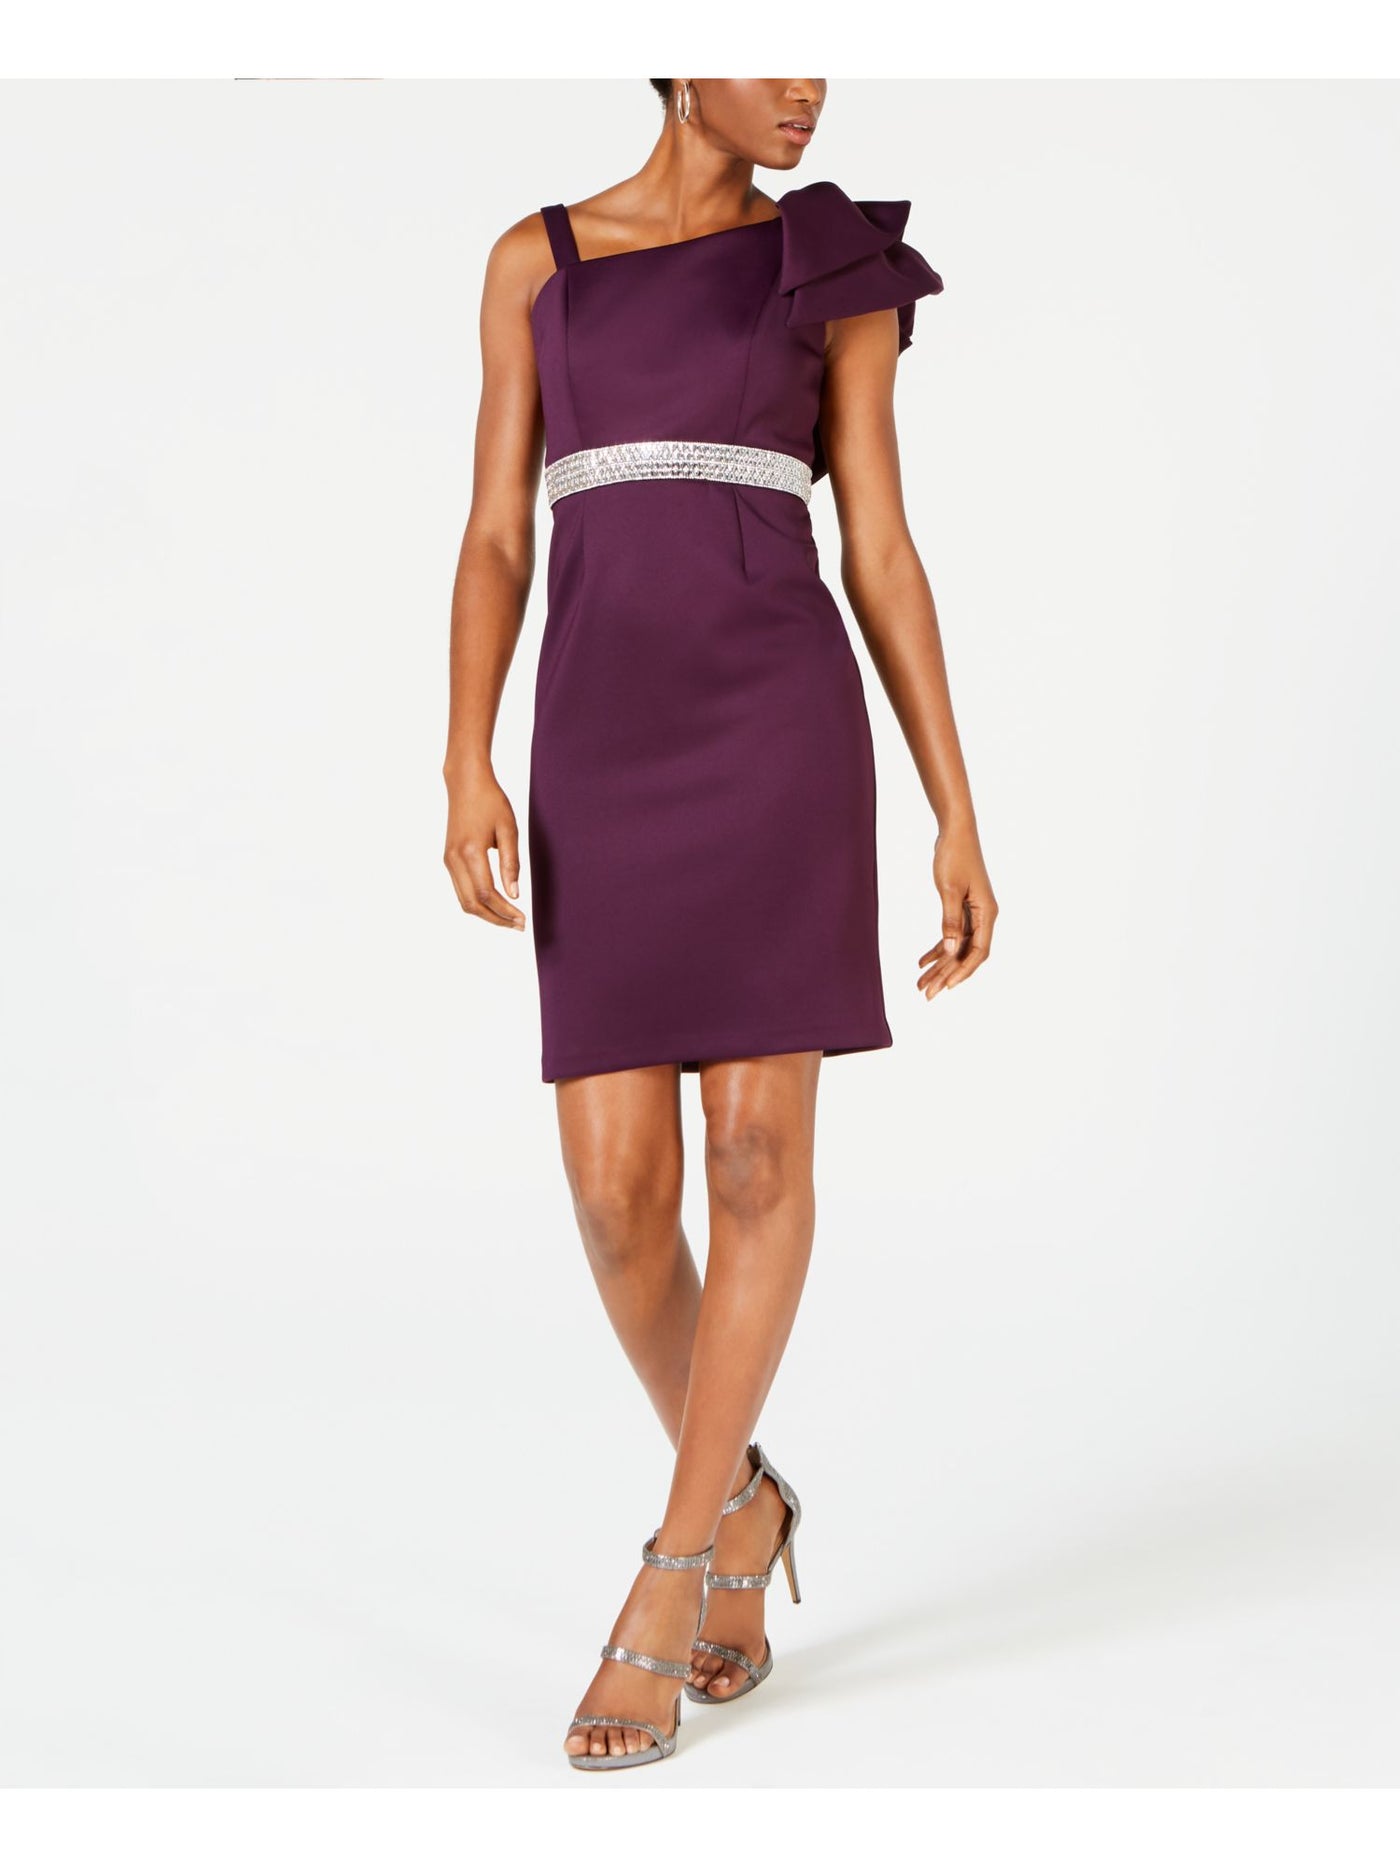 NIGHTWAY Womens Purple Sleeveless Above The Knee Sheath Cocktail Dress Size: 4